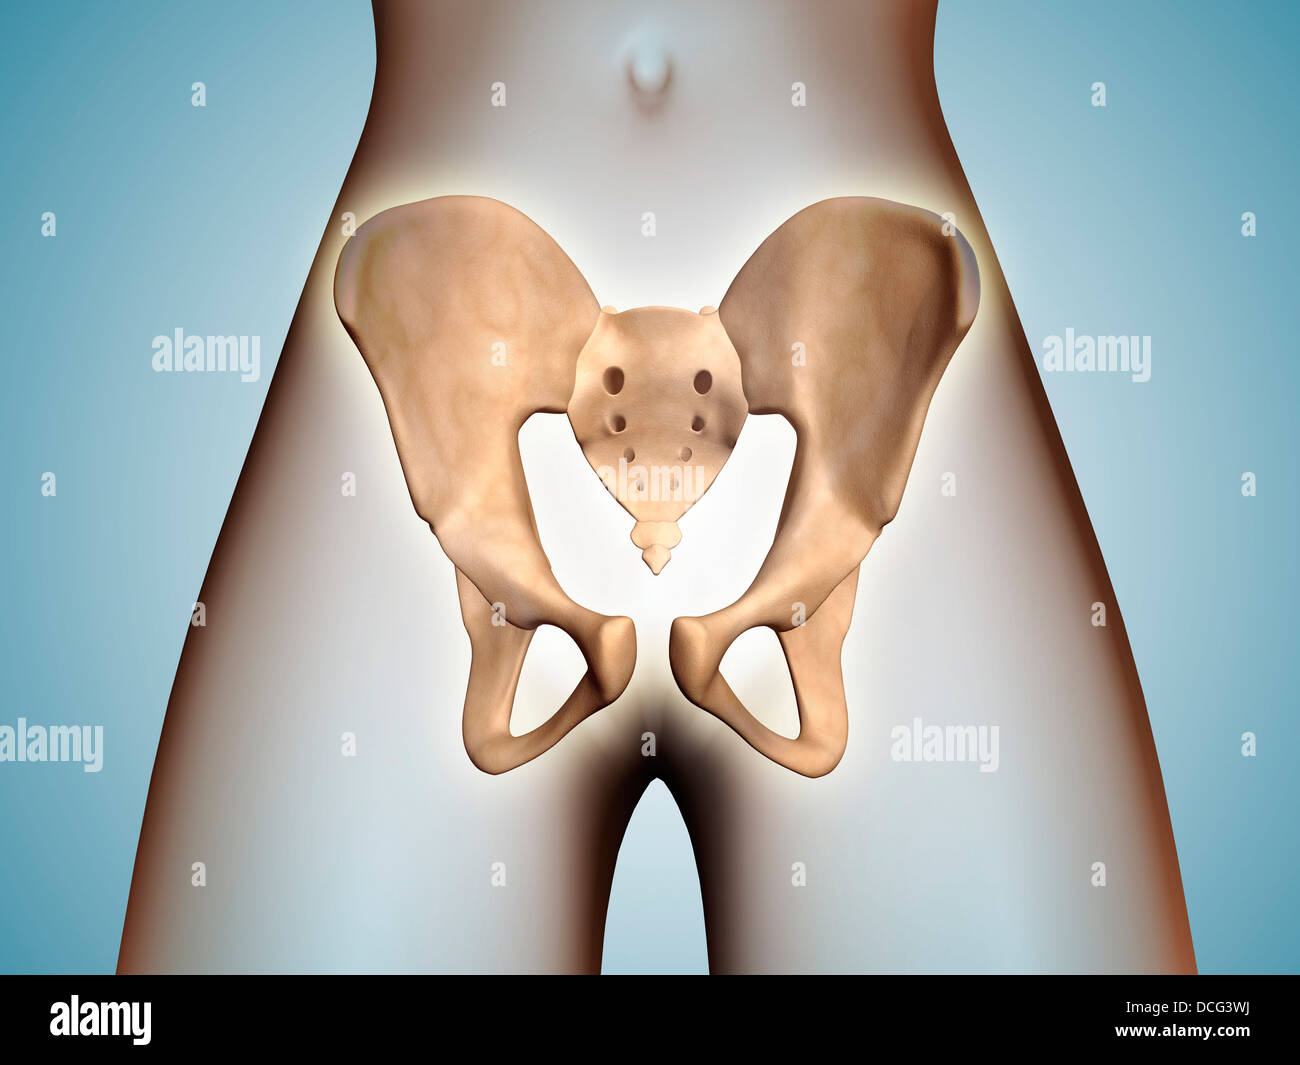 Anatomy of pelvic bone on female body. Stock Photo